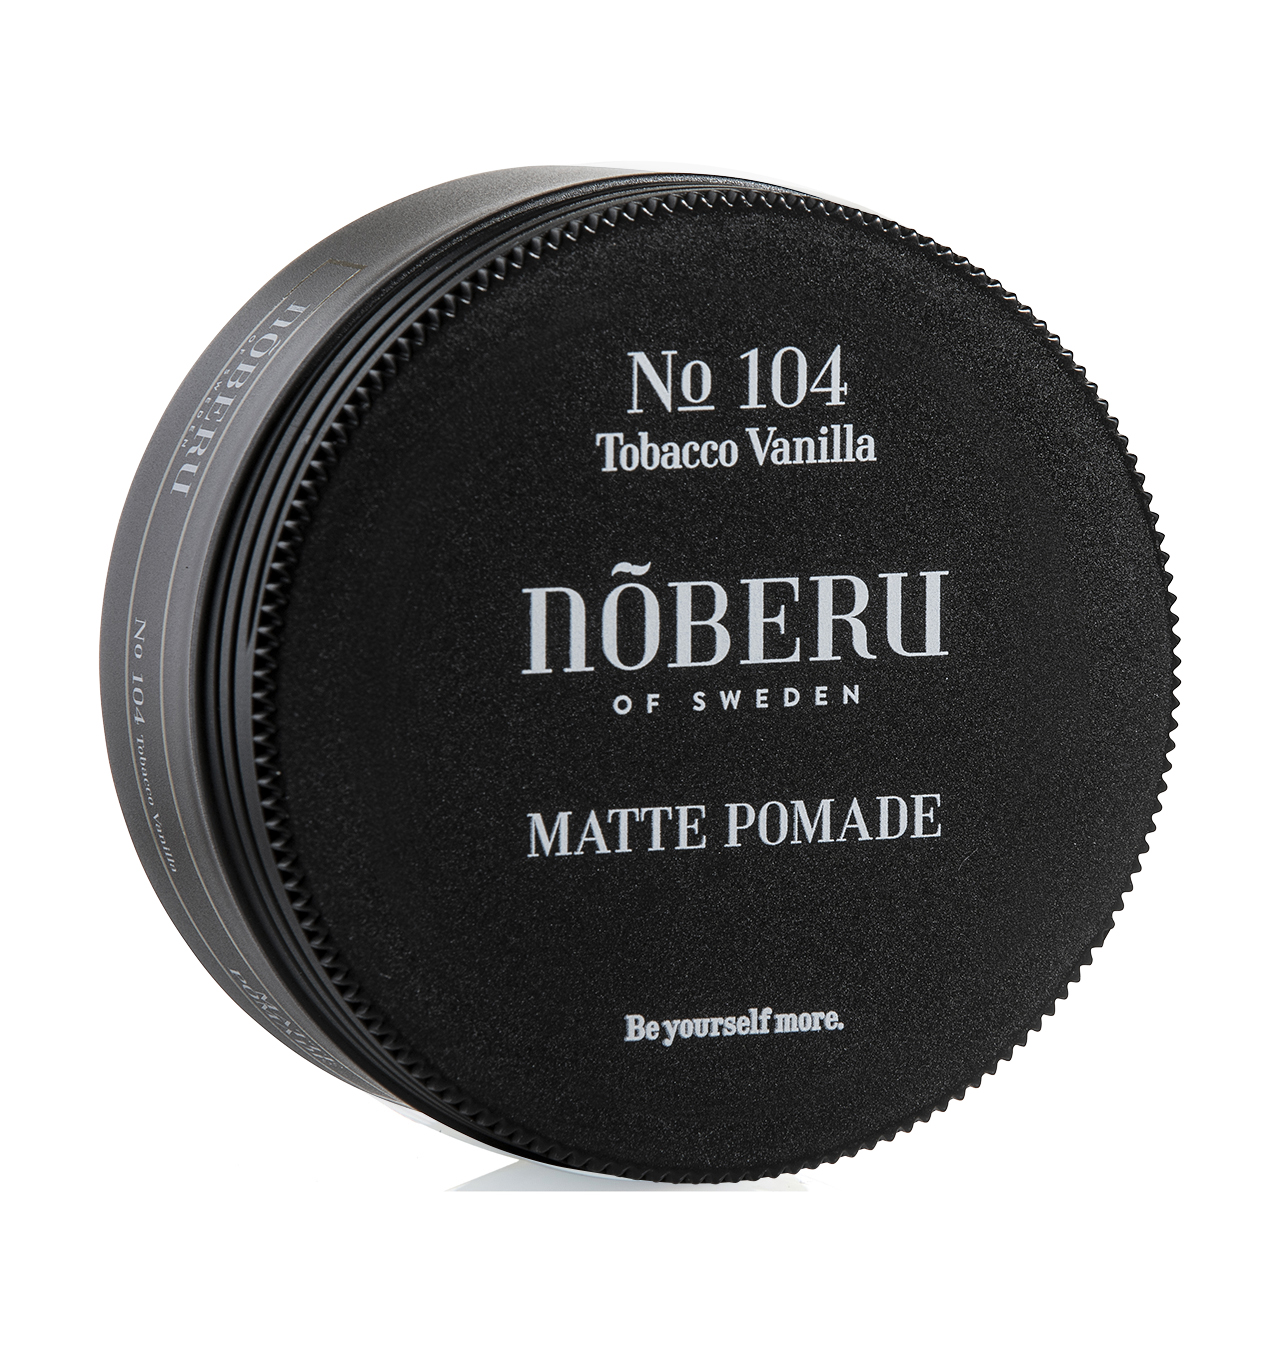 Nõberu---Matte-Pomade-Tobacco-Vanilla---80-ml